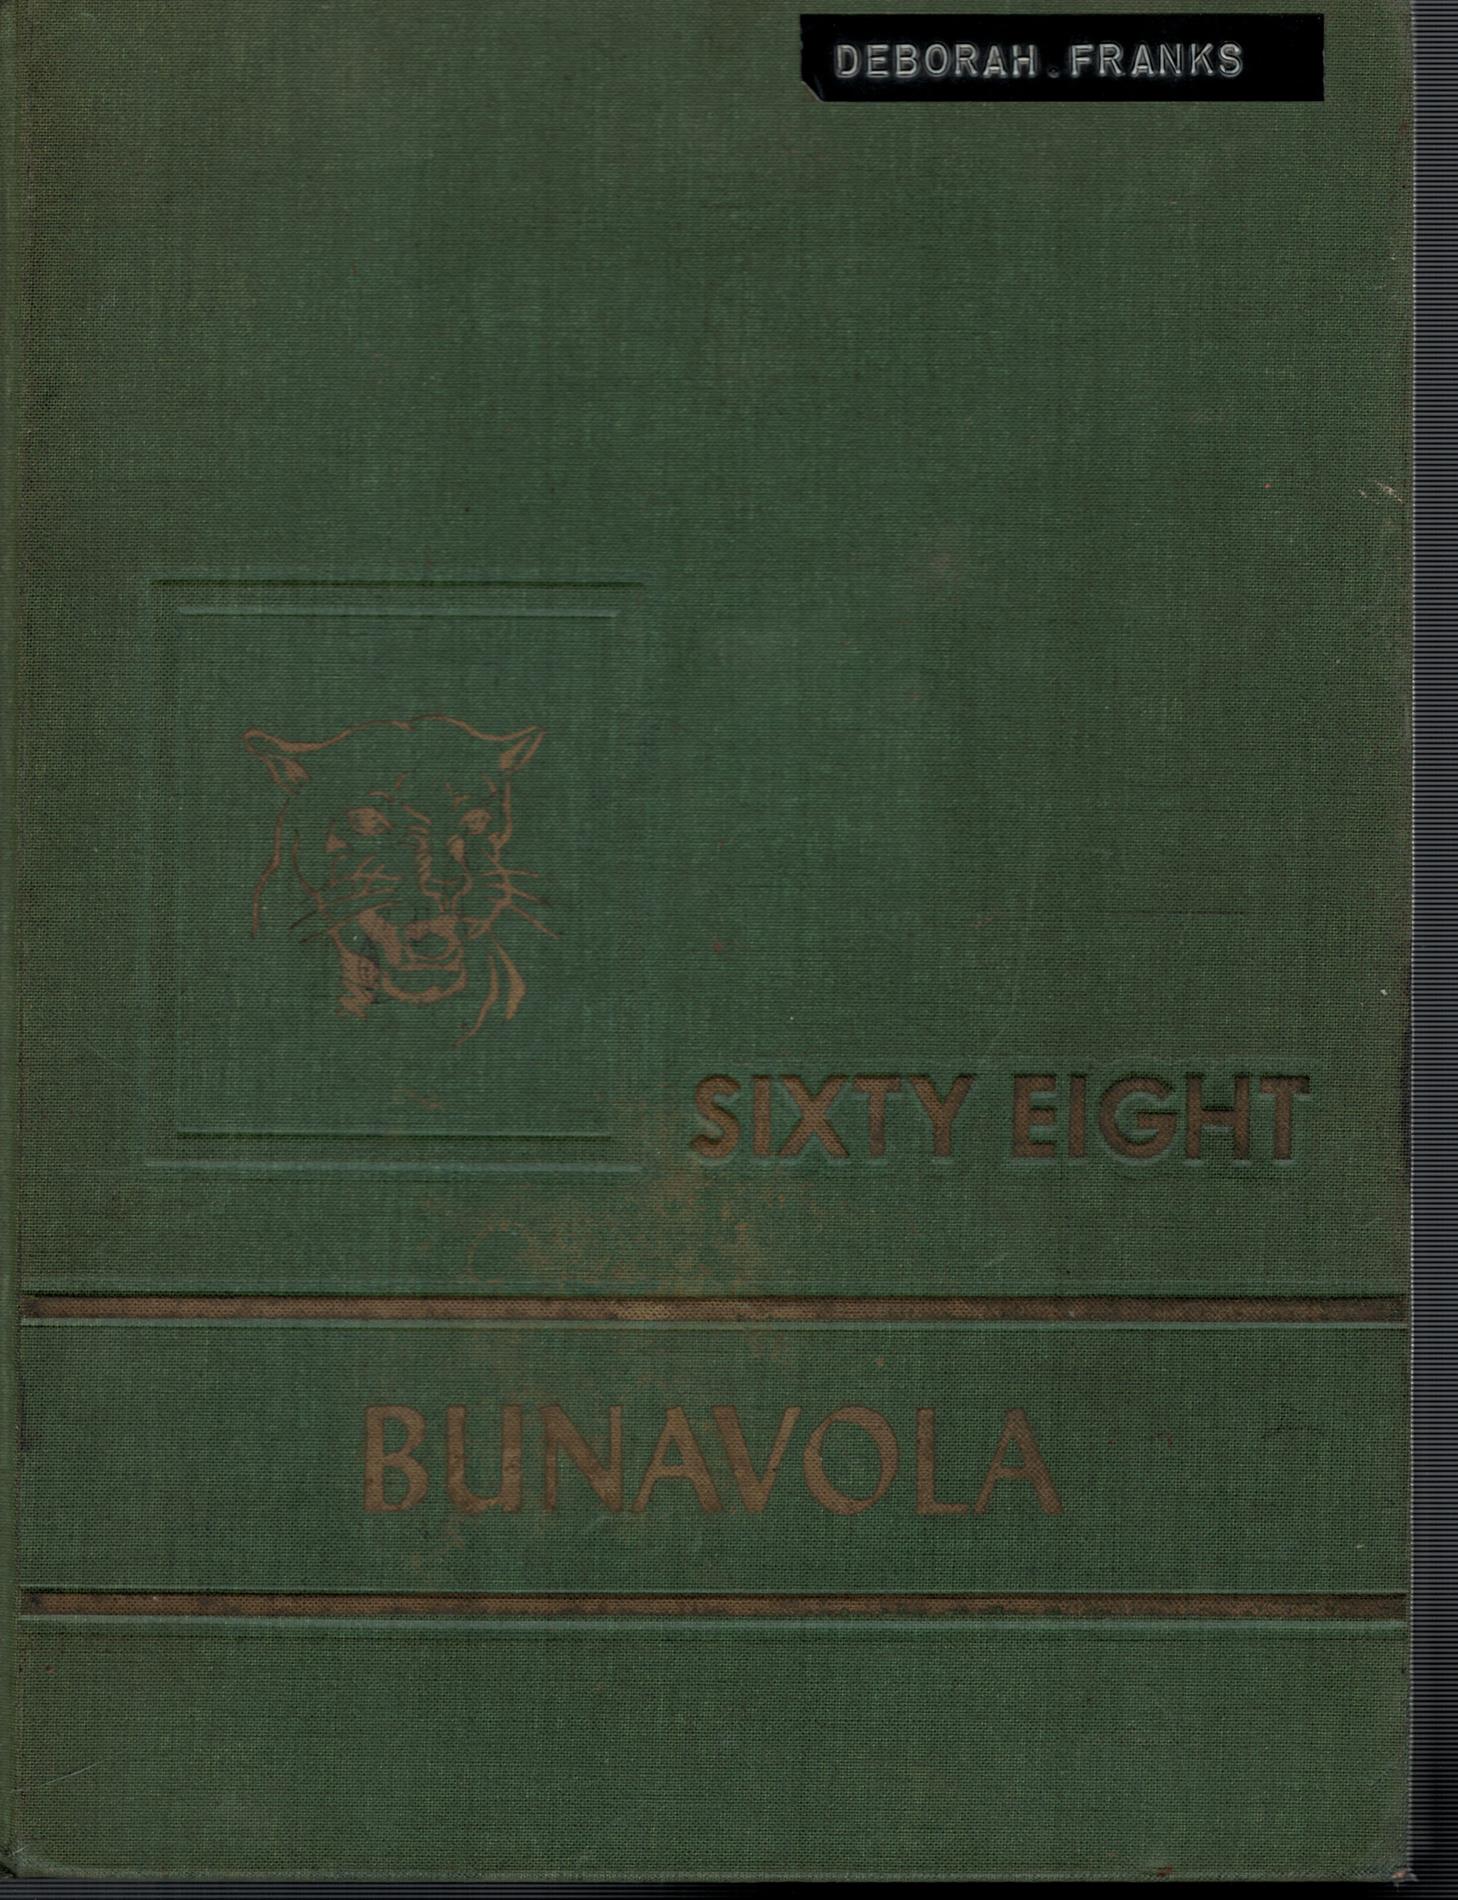 1968 Bunavola